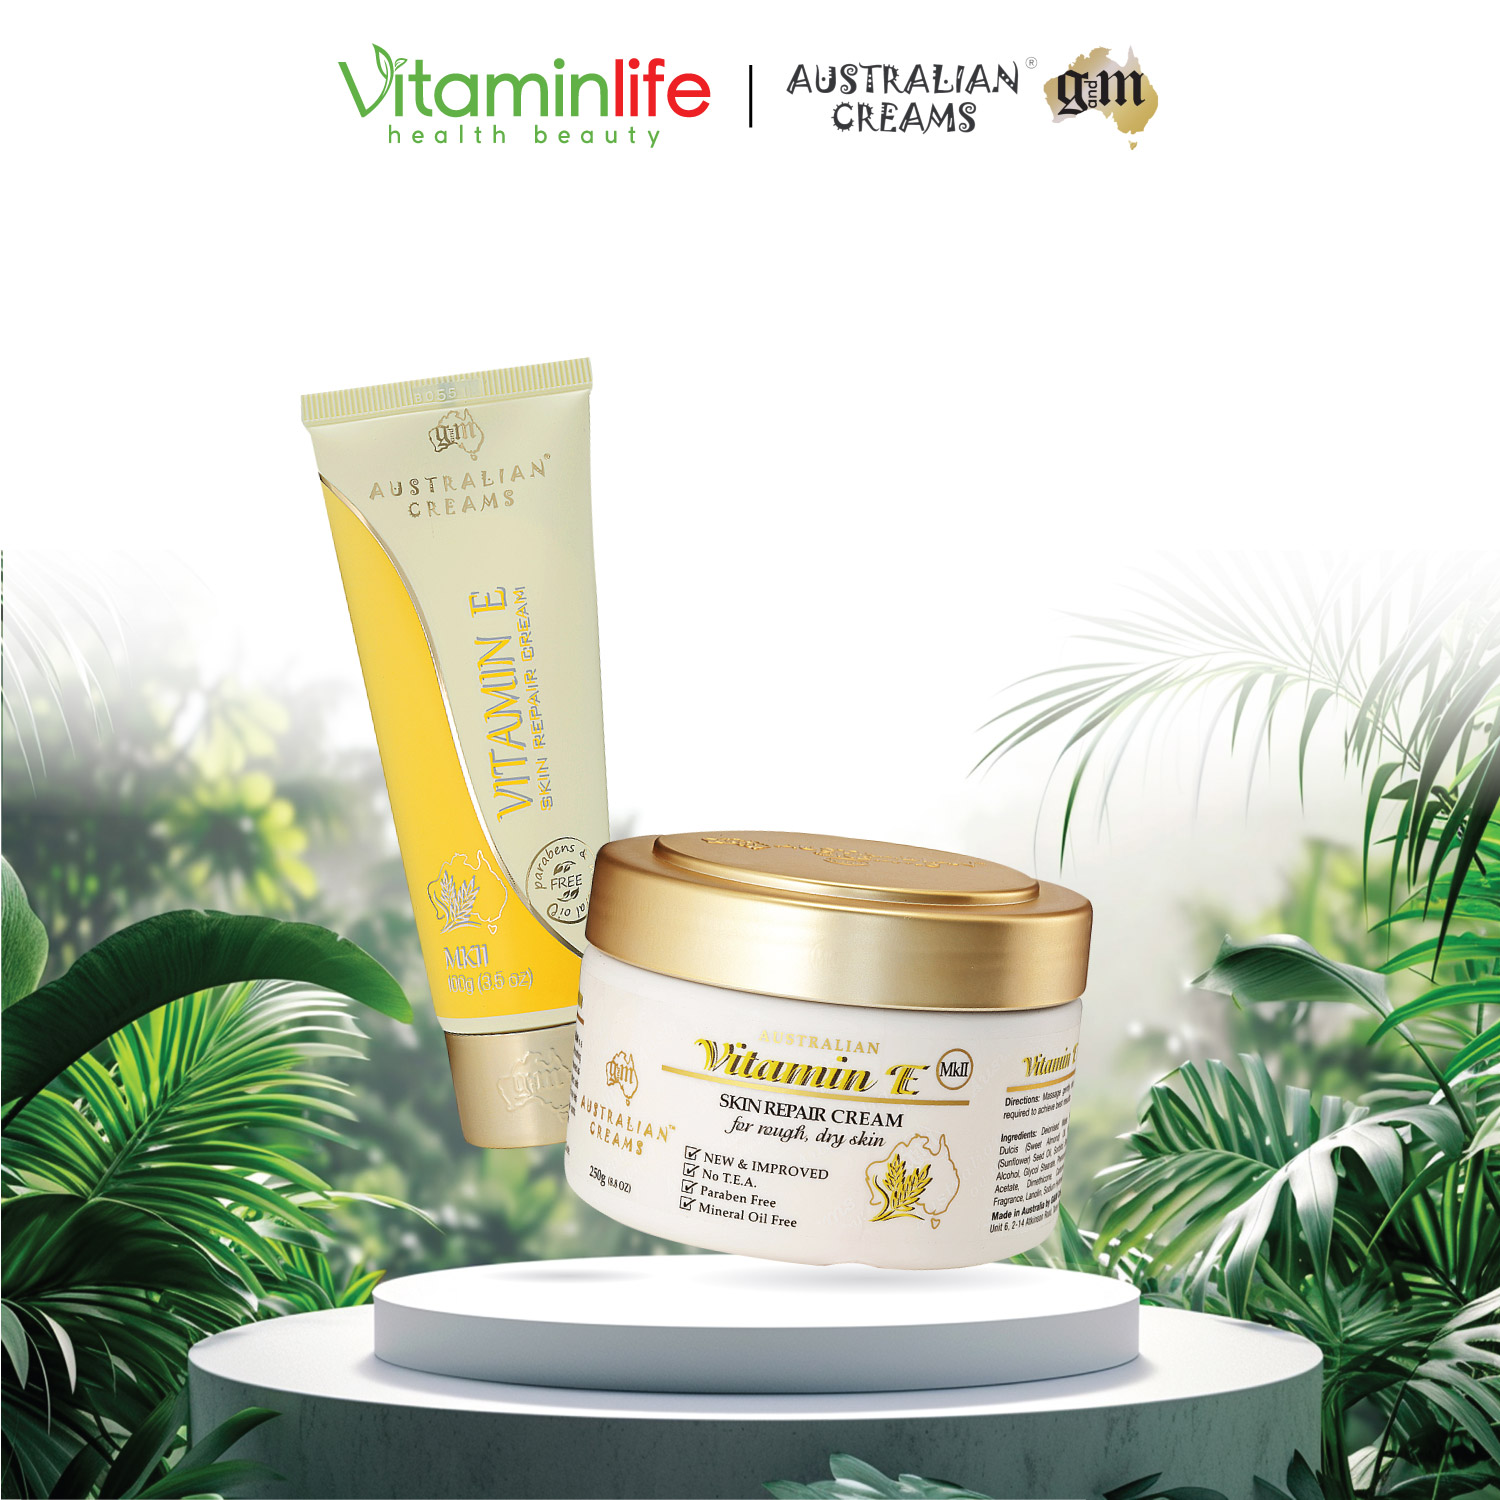 Kem dưỡng chăm sóc và phục hồi da Vitamin E Australian Creams MKII 250g